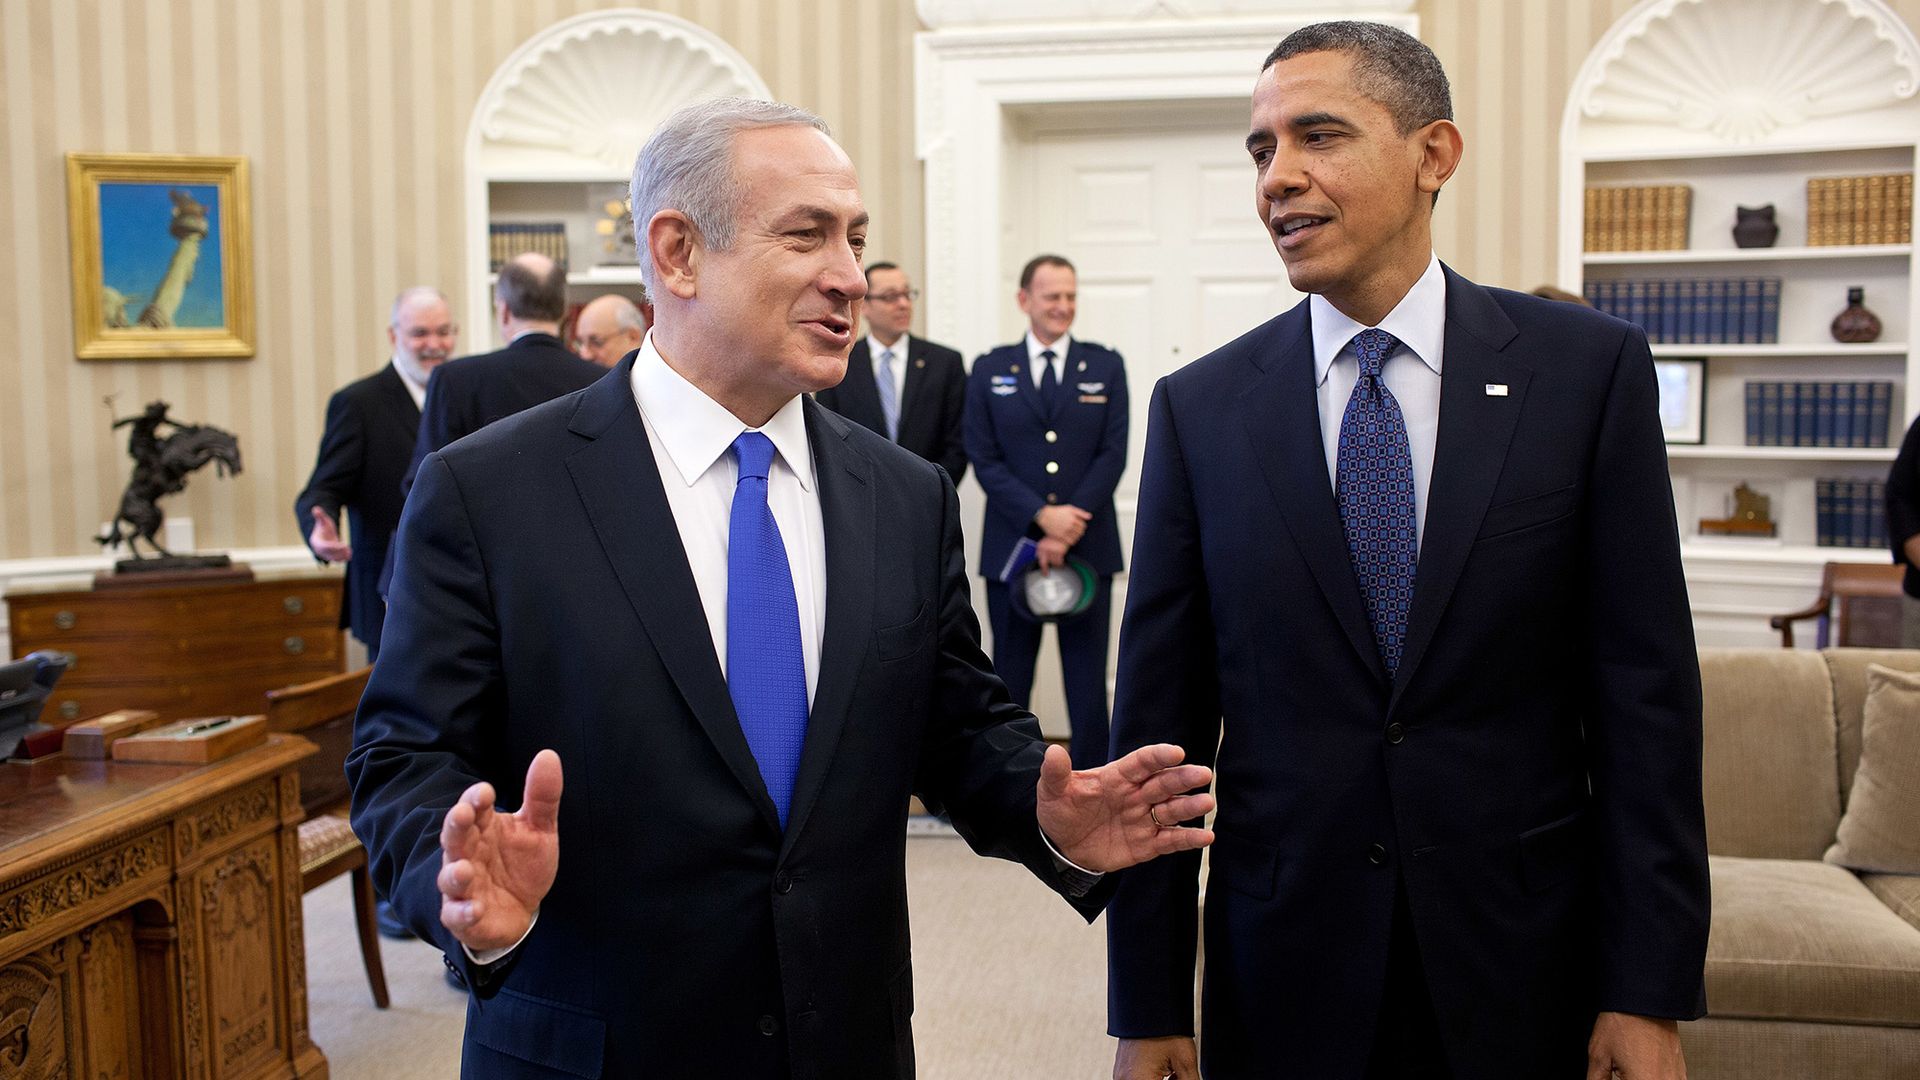 Benjamin Netanyahu meeting with Barack Obama (2012)